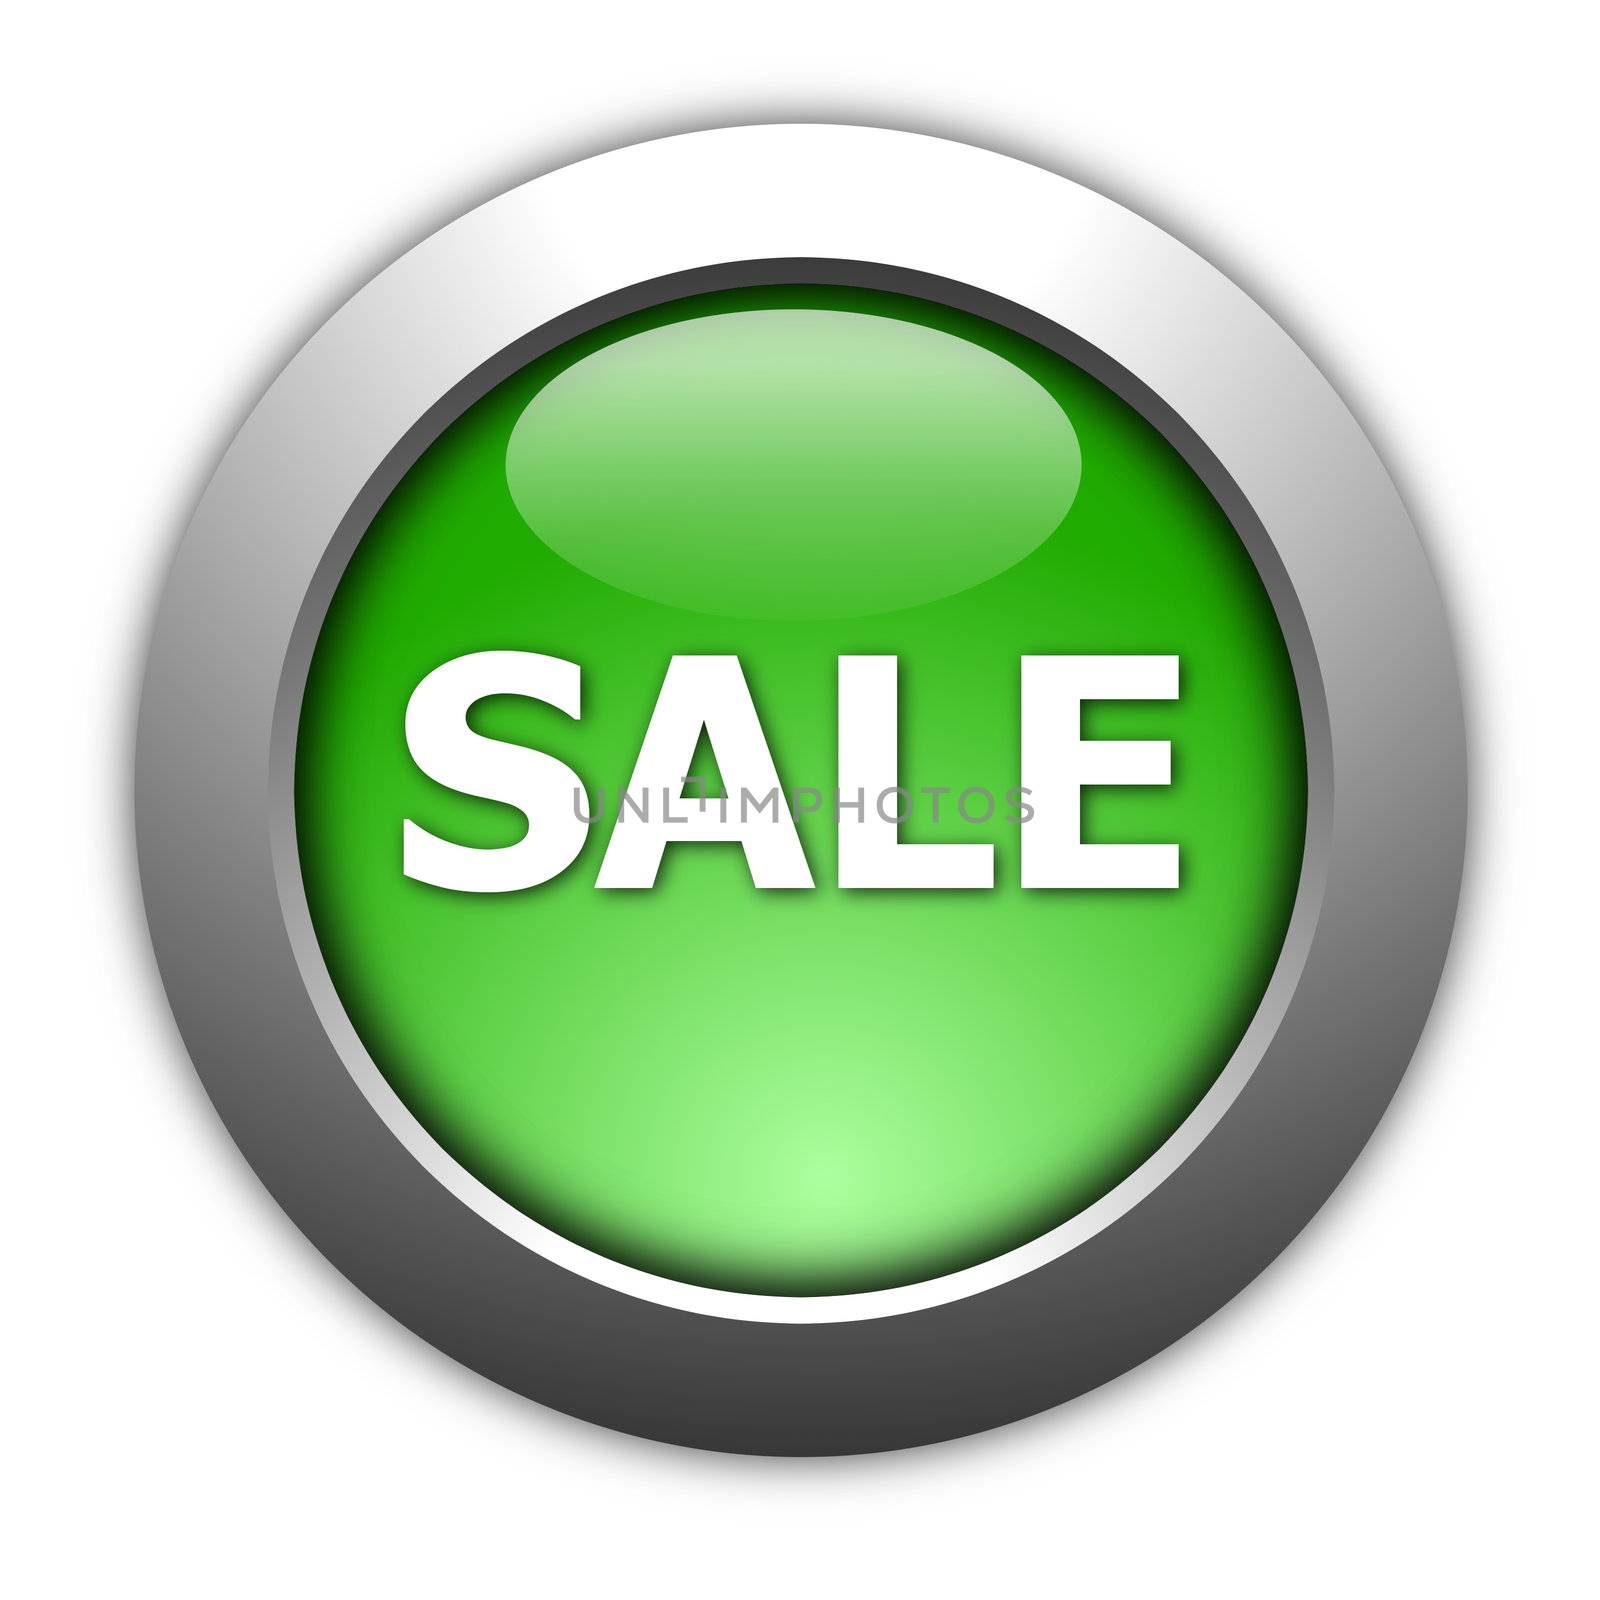 sale button by gunnar3000